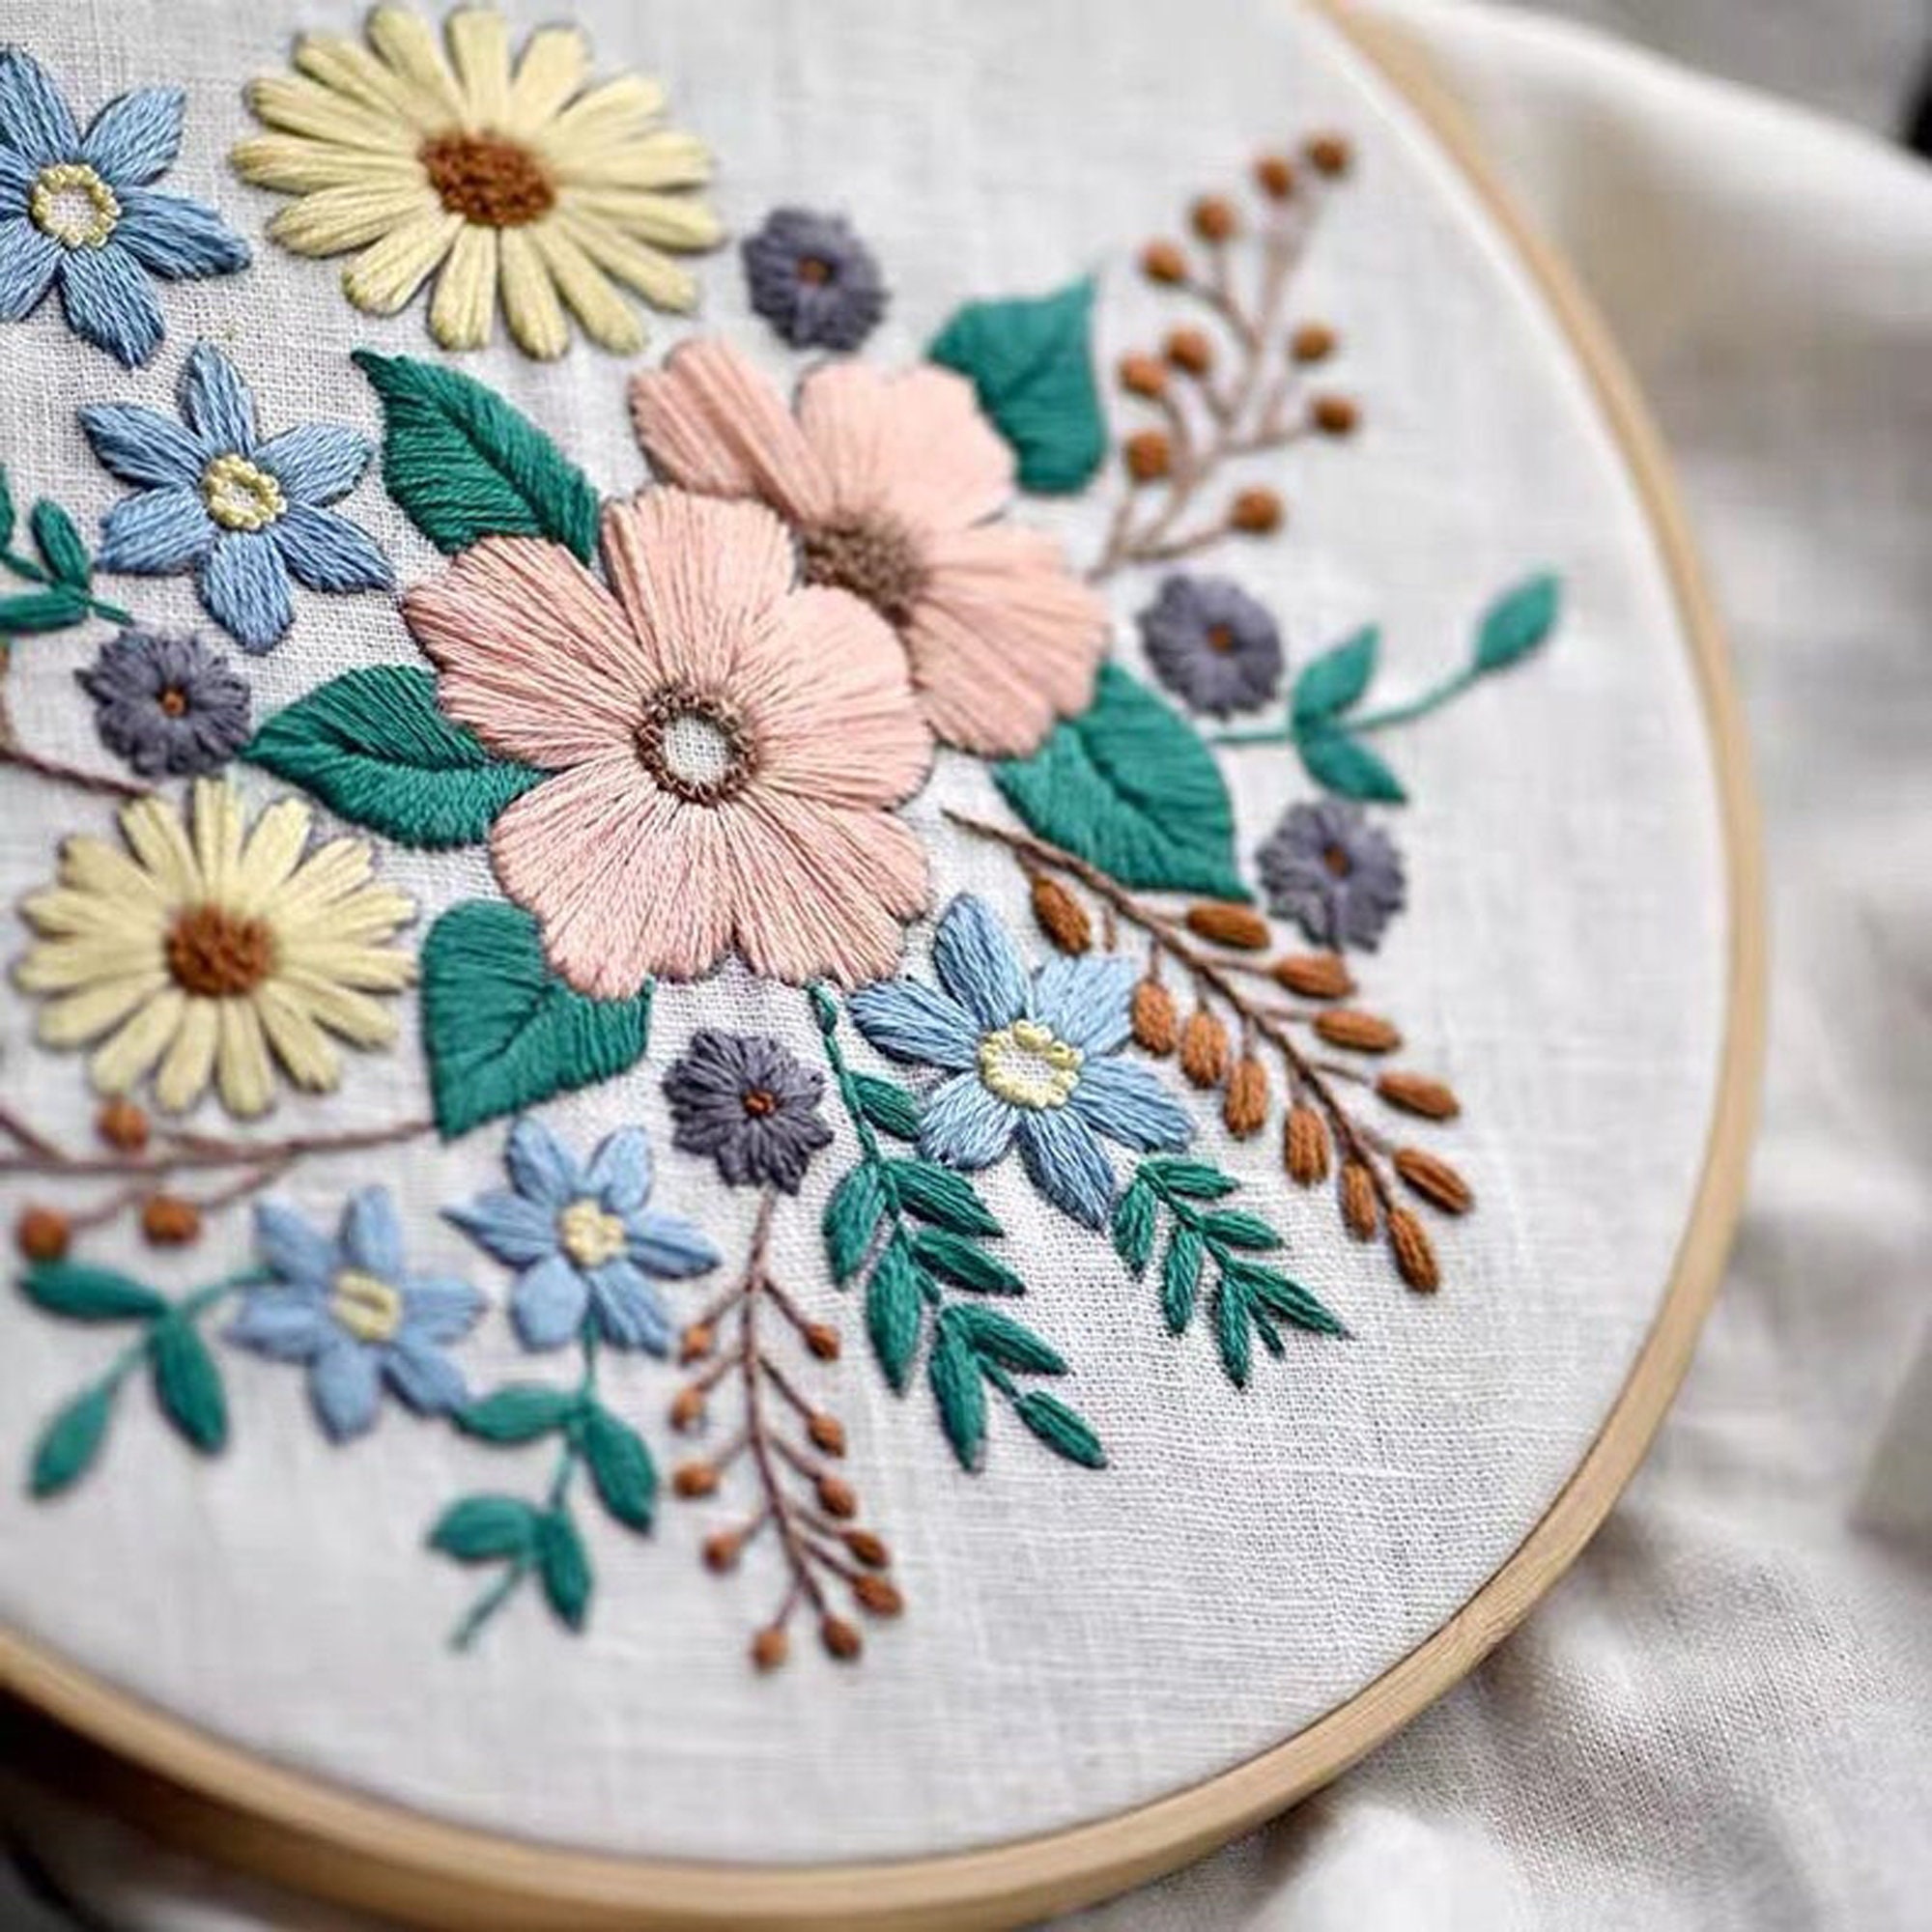  Embroidery Kit, JUSTDOLIFE Cross Stitch Kit Creative